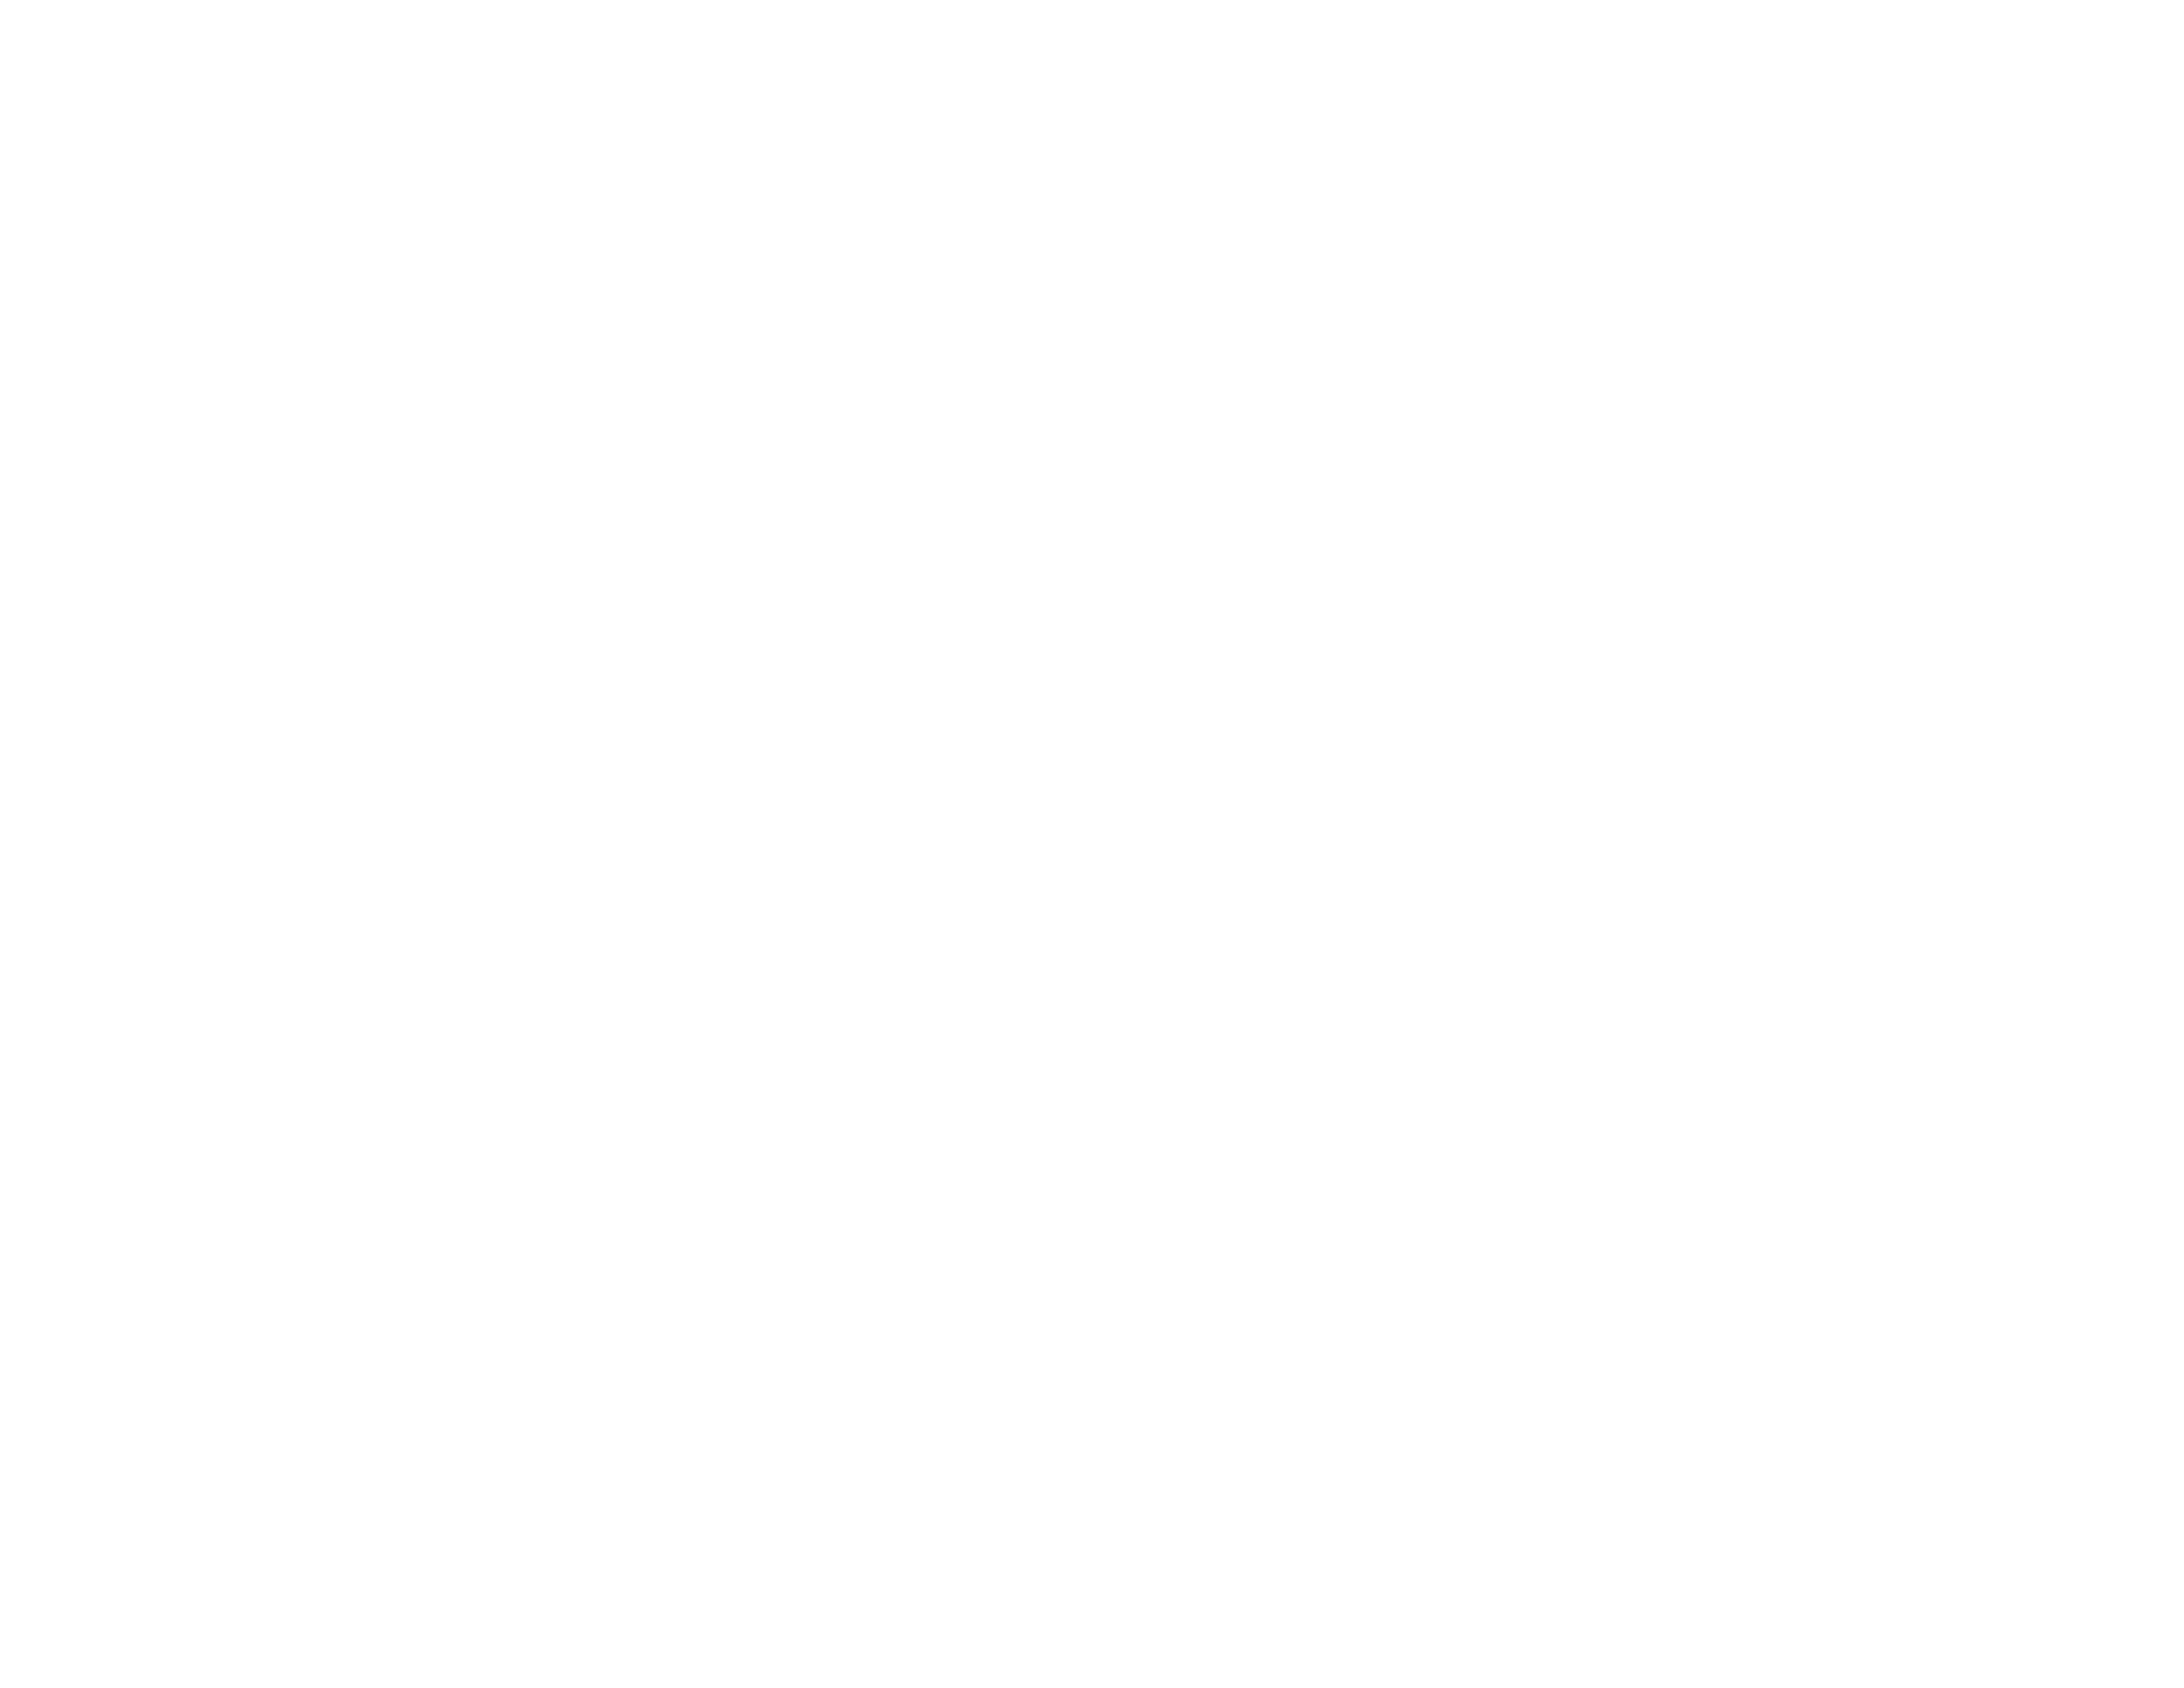 Brothers Merchandise